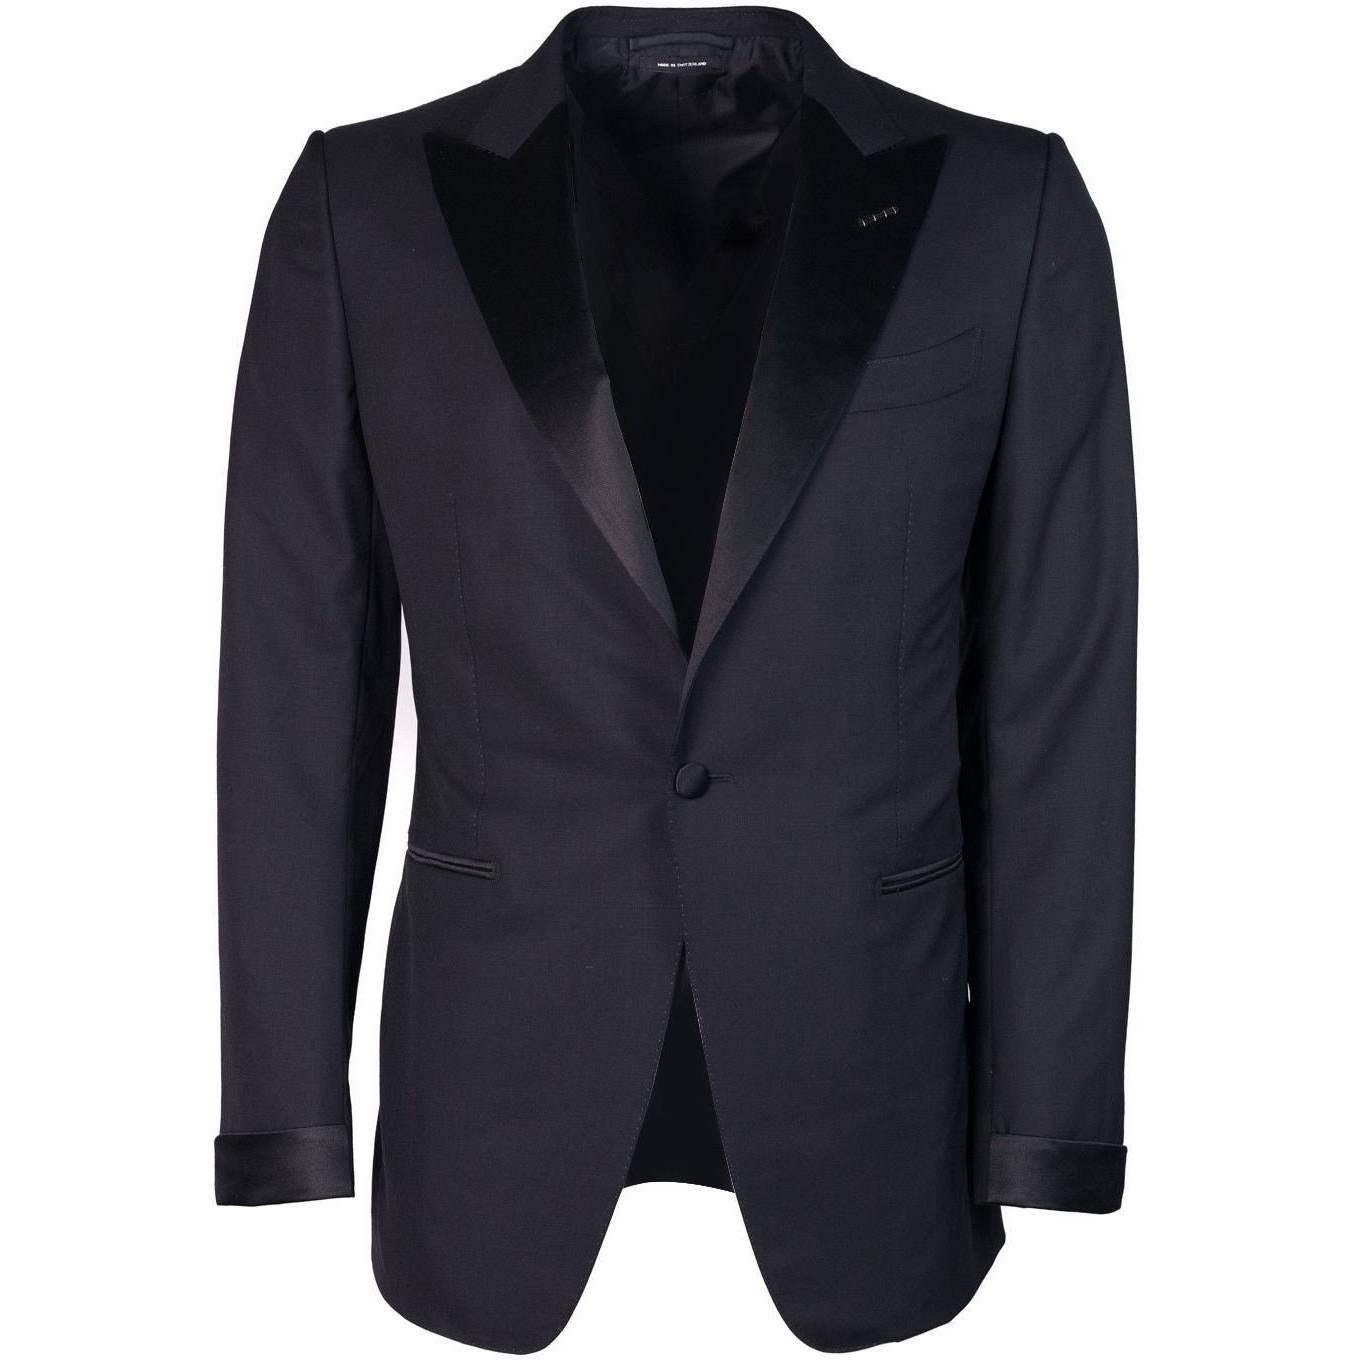 Tom Ford Men's Black Wool Blend Shelton Two Piece Suit For Sale